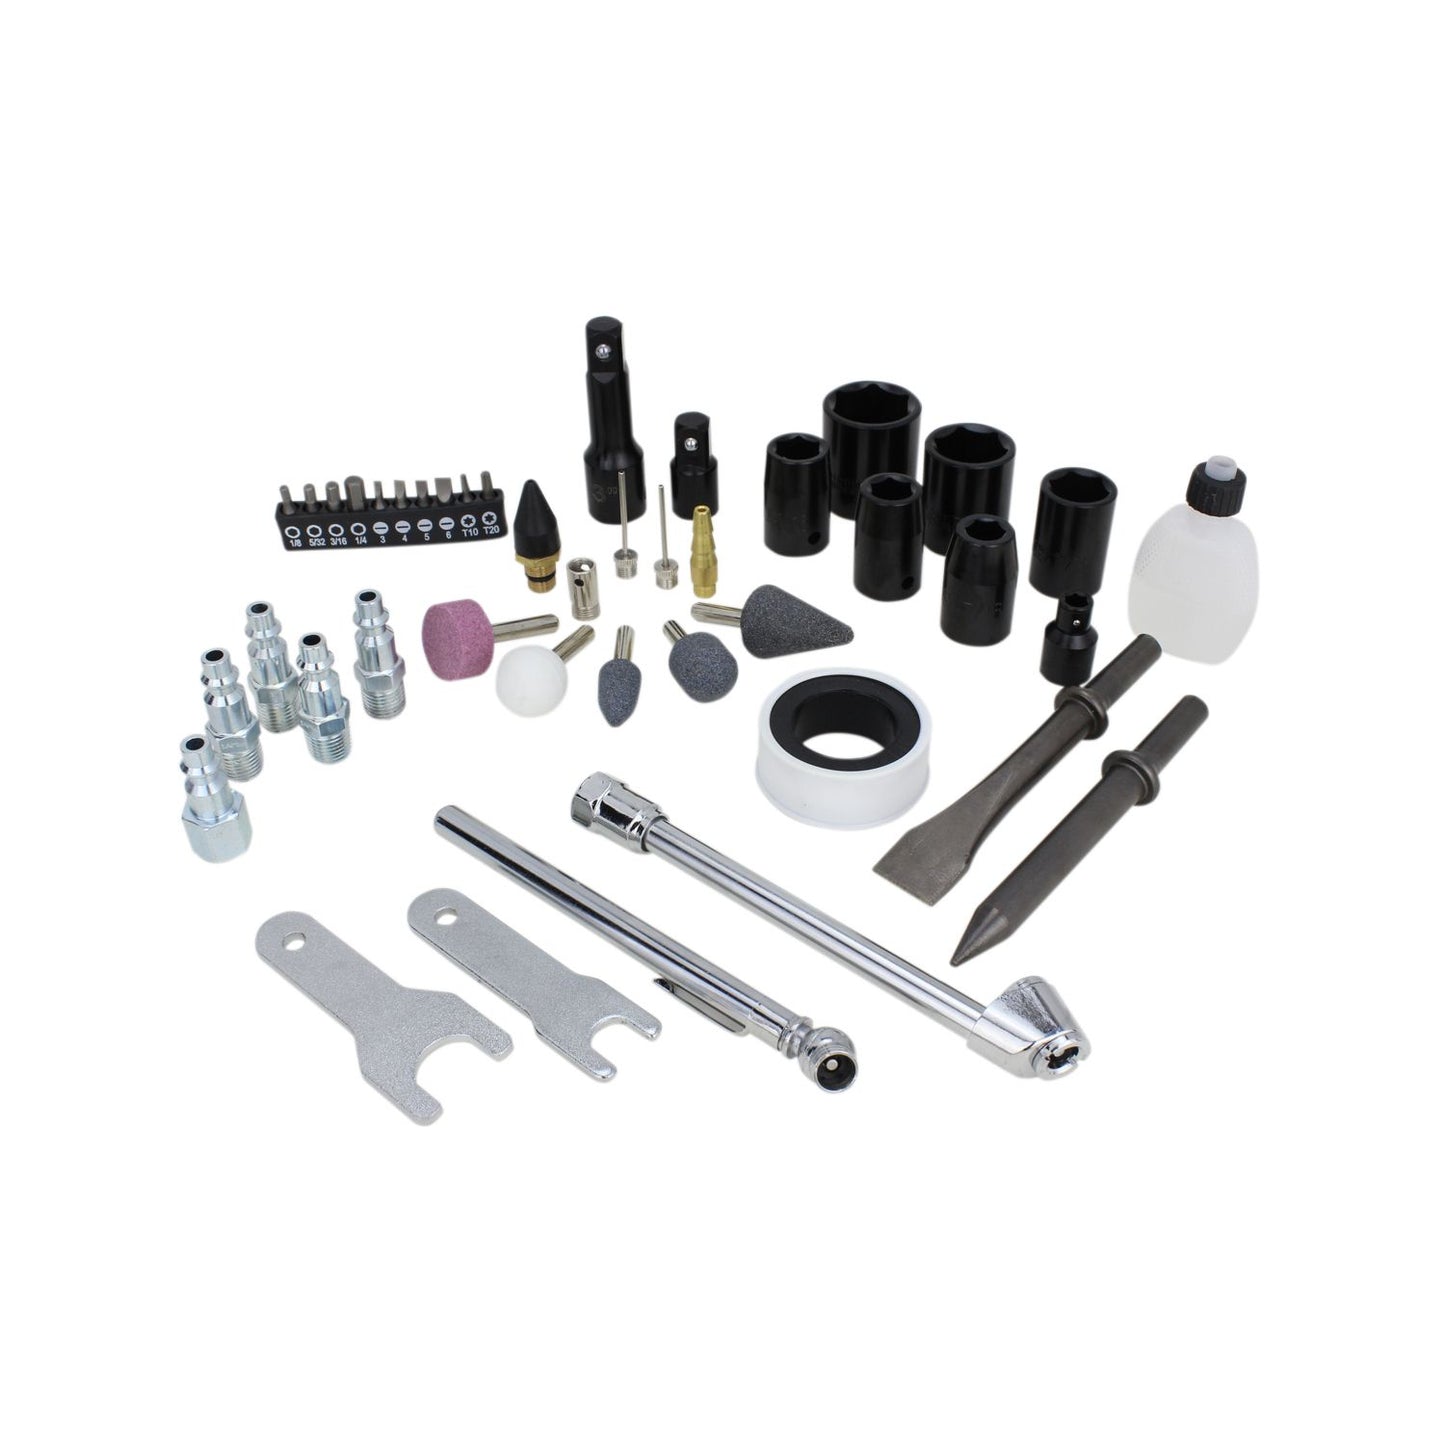 Milton® EXELAIR® 50-Pc. COMPOSITE Professional High Torque Automotive Air Tools & Accessory Kit EX5005CKIT